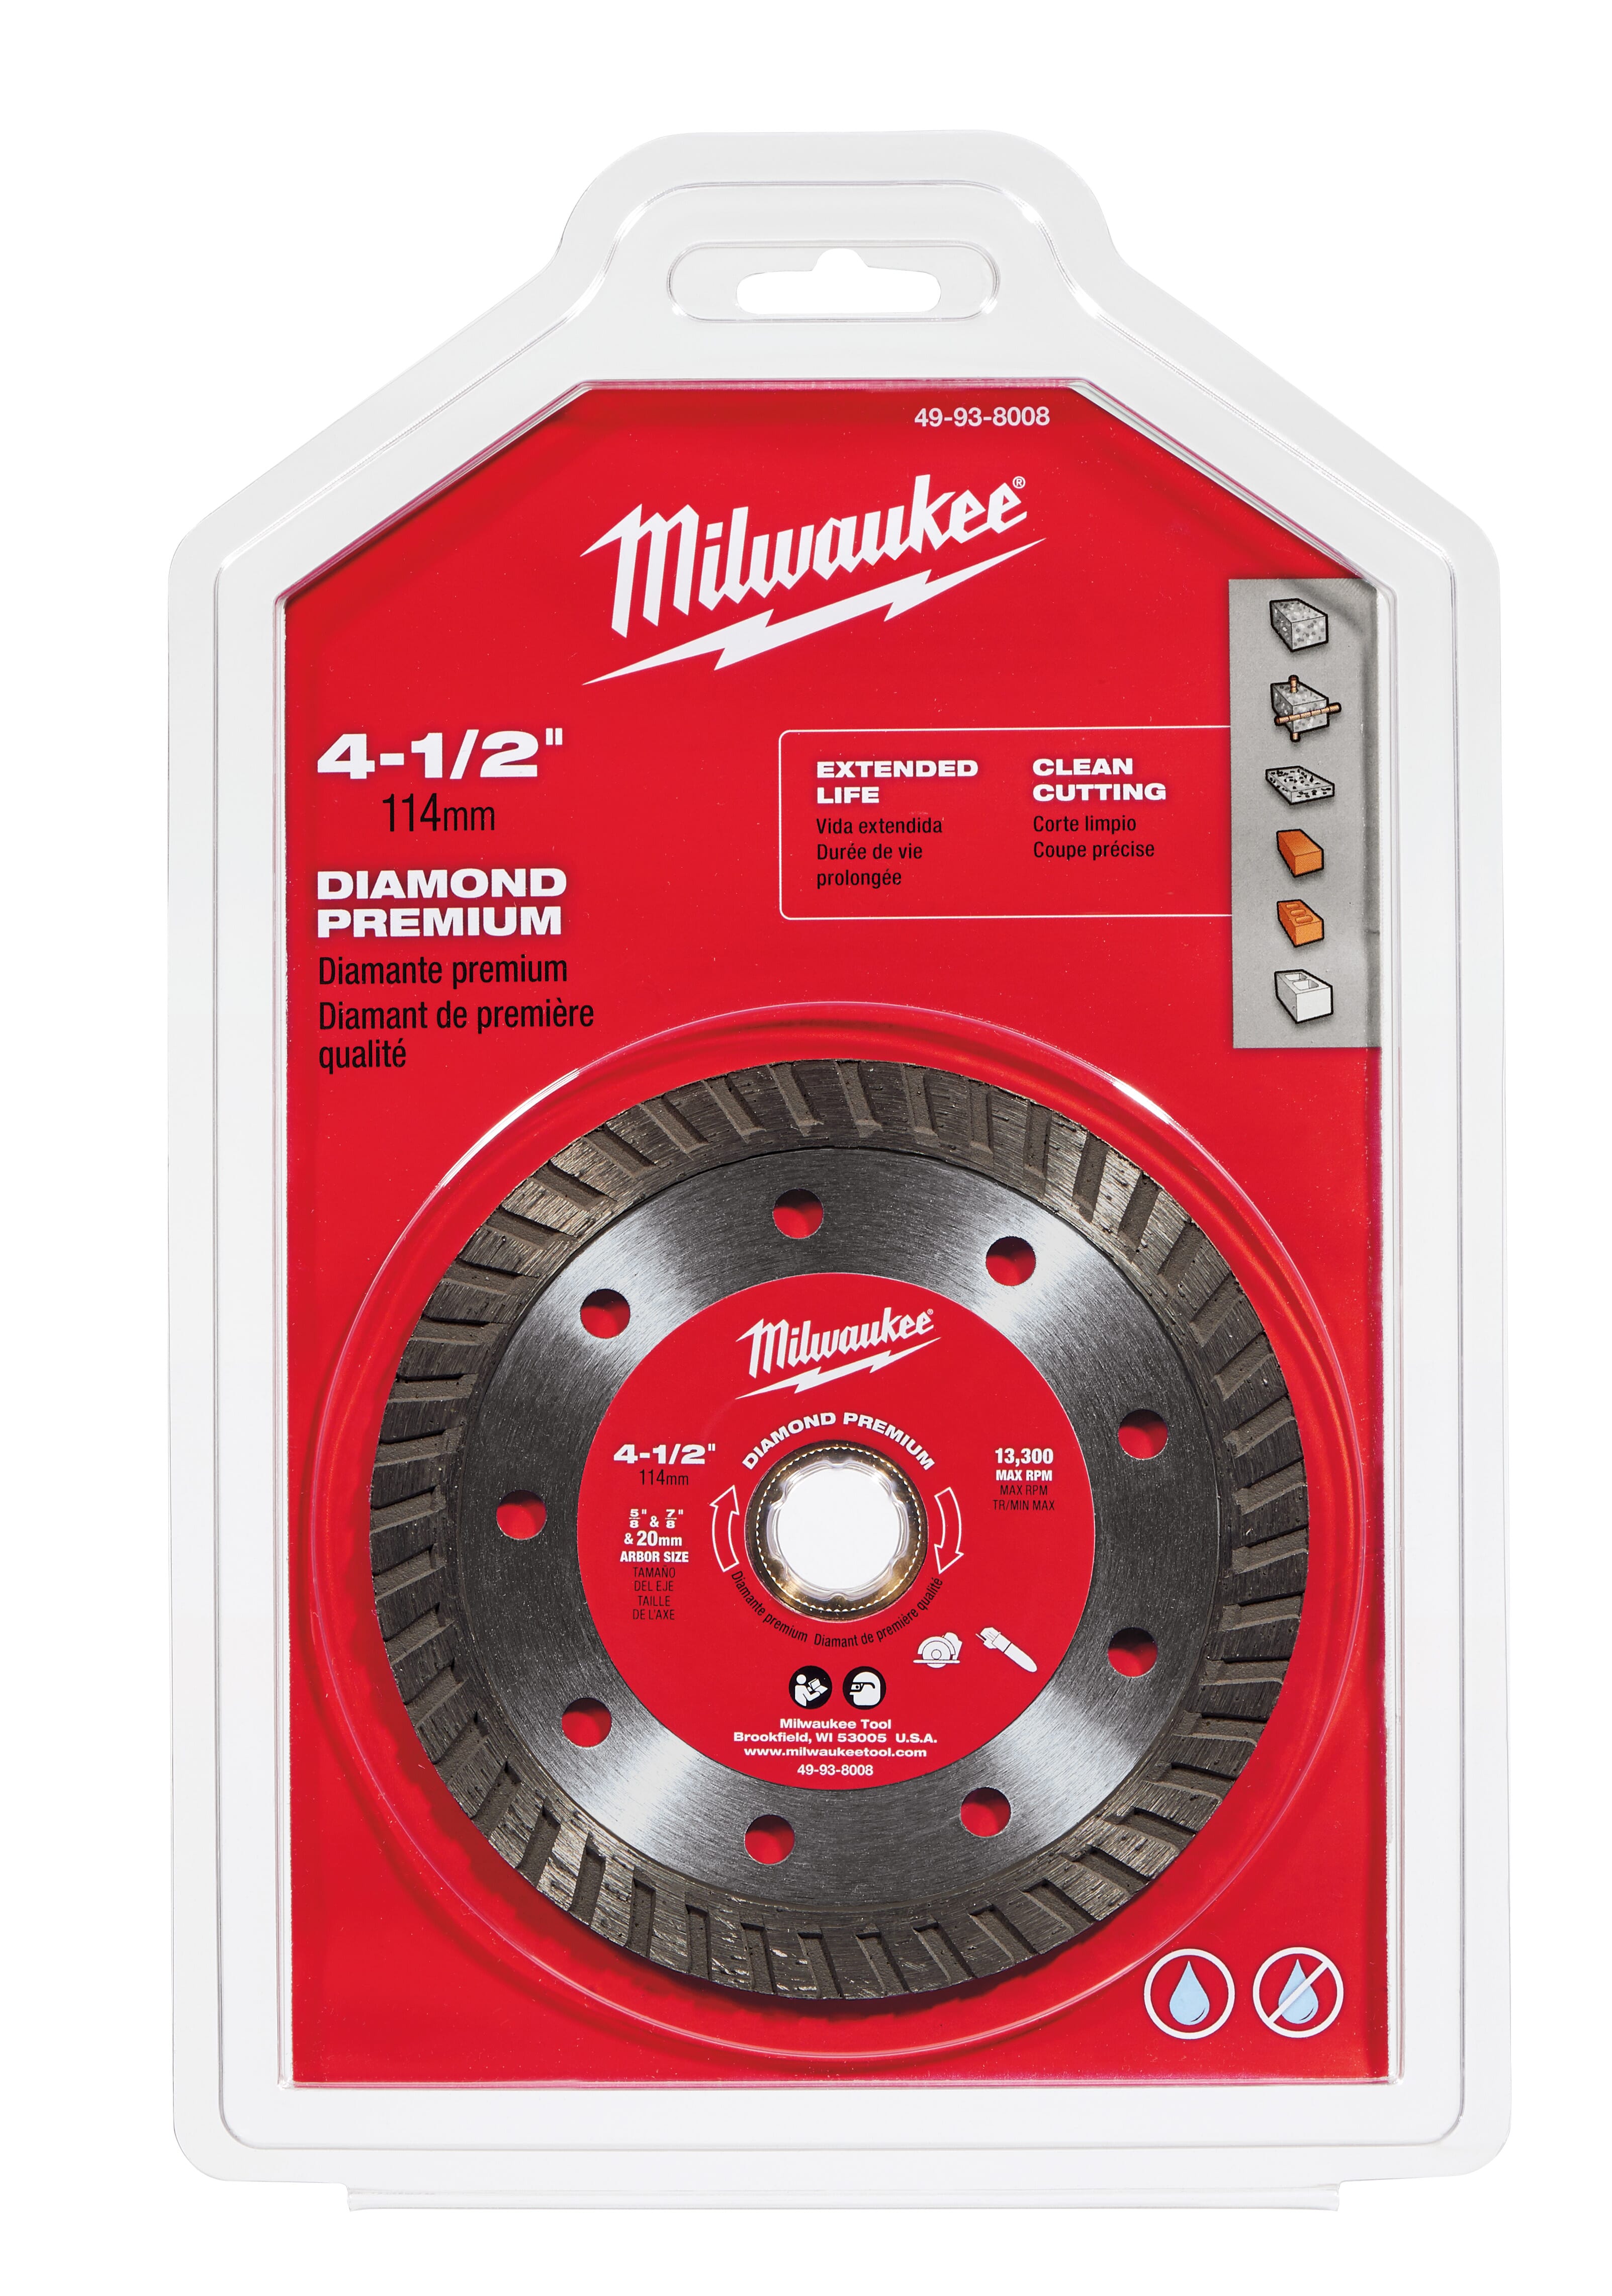 Milwaukee® 49-93-8008 Premium Turbo Circular Diamond Saw Blade, 4-1/2 in Dia Blade, 7/8 in, 20 mm, 5/8 in Arbor/Shank, Wet/Dry Cutting